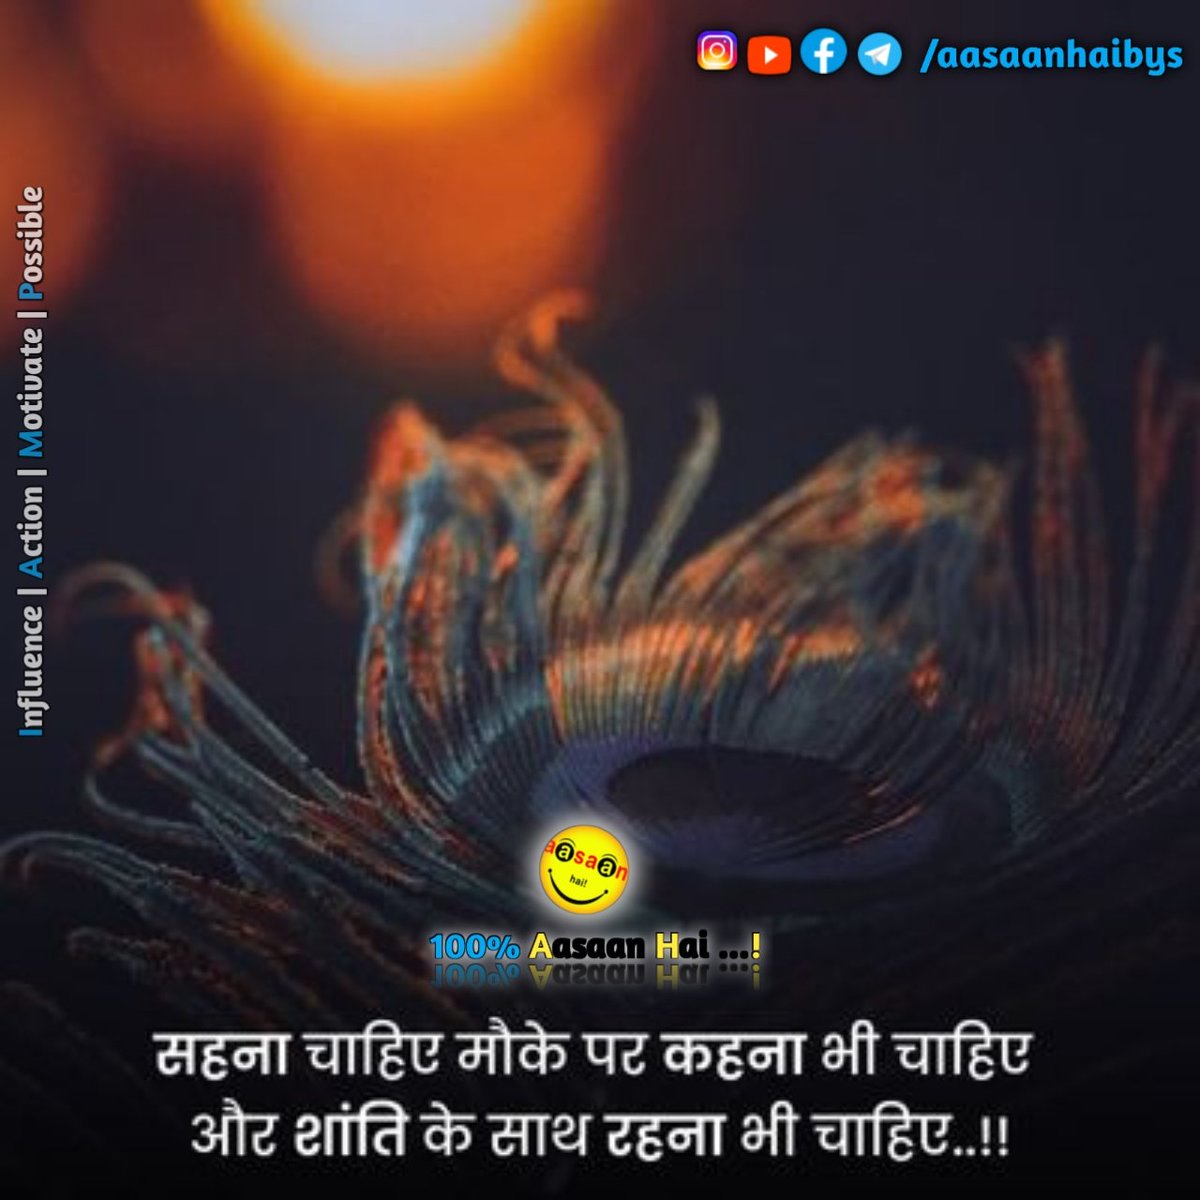 Patience

#morningpost #instapost #instagram #learning #krishnaquotes #aasaahaibys #drvivekbindra #sandeepmaheswari
instagram.com/p/CsxOkvoK8WL/…